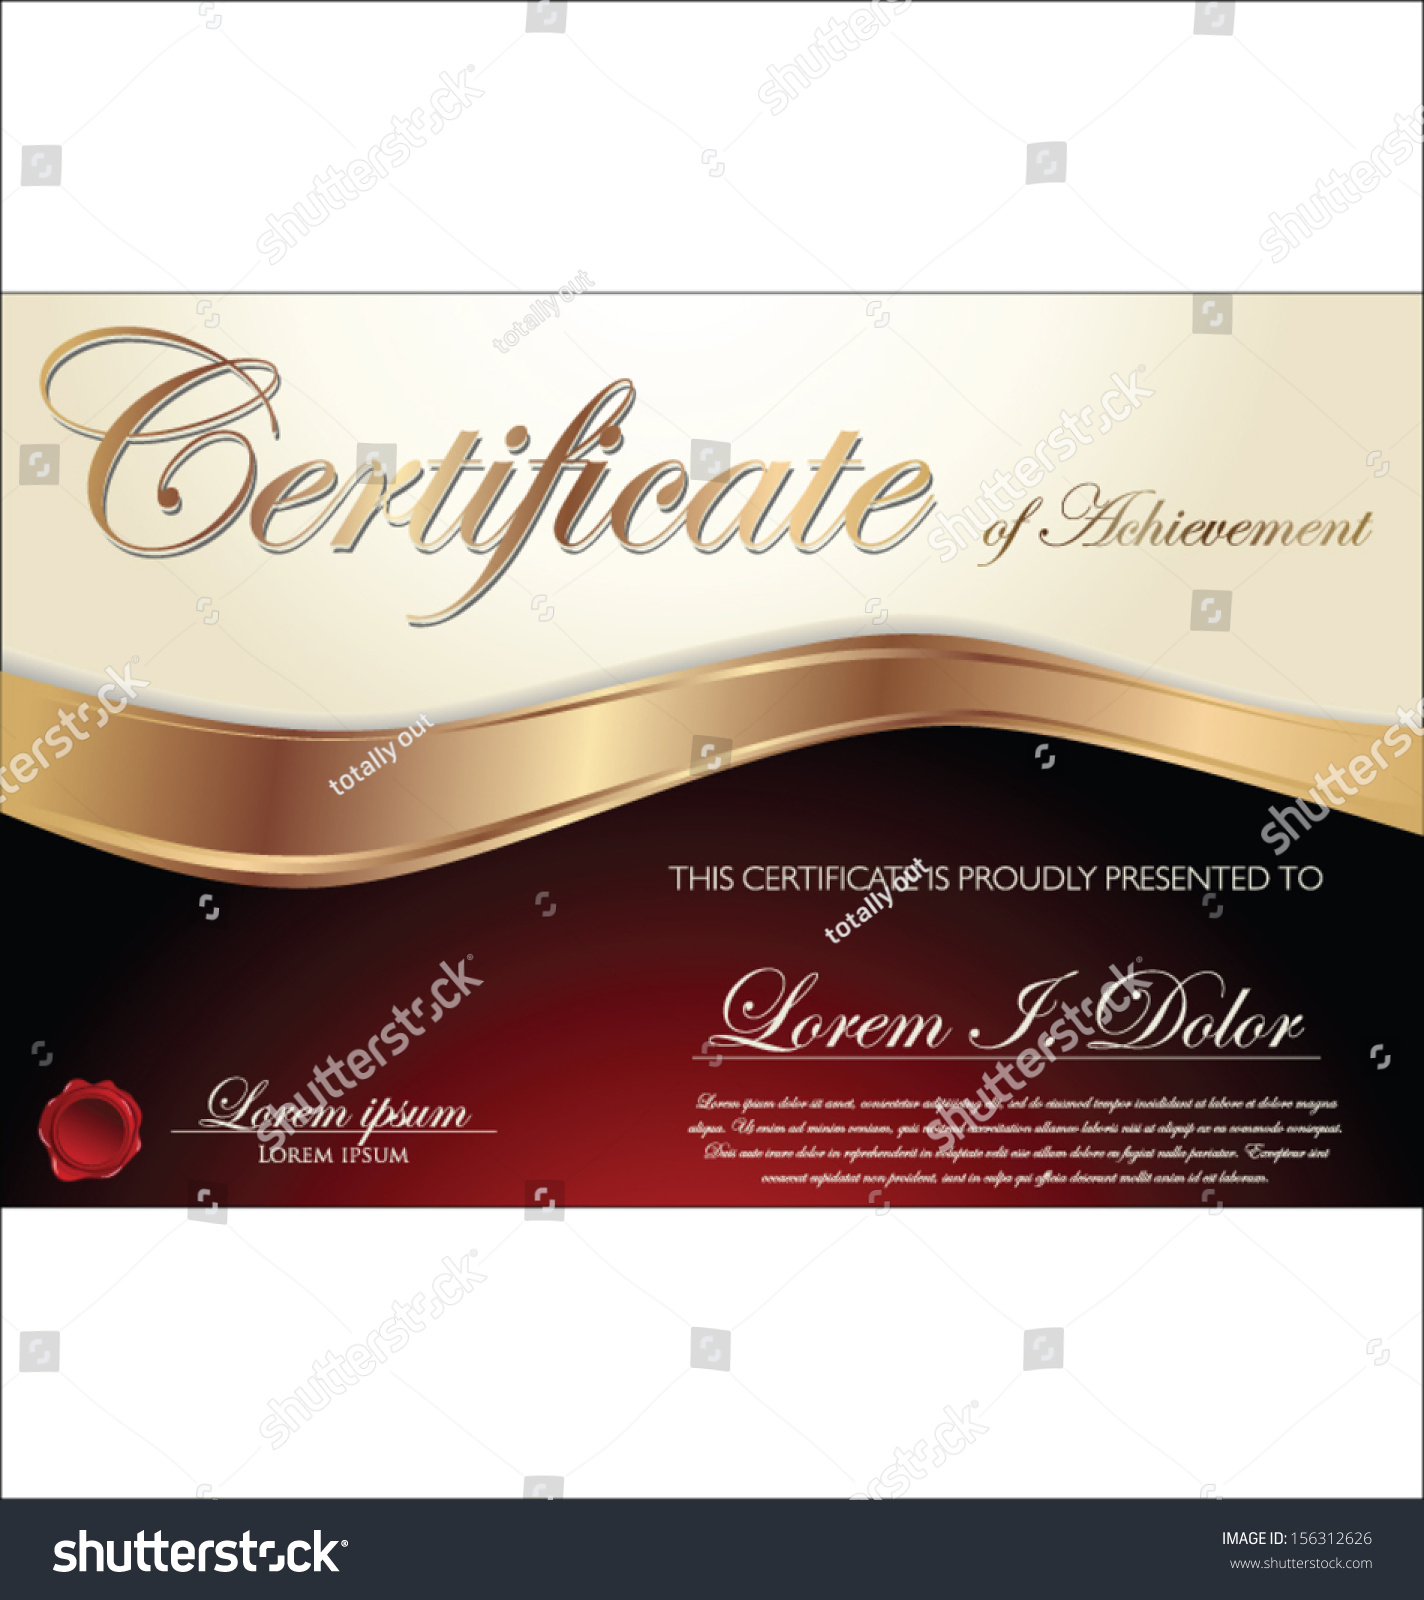 Certificate Template Stock Vector Illustration 156312626 : Shutterstock